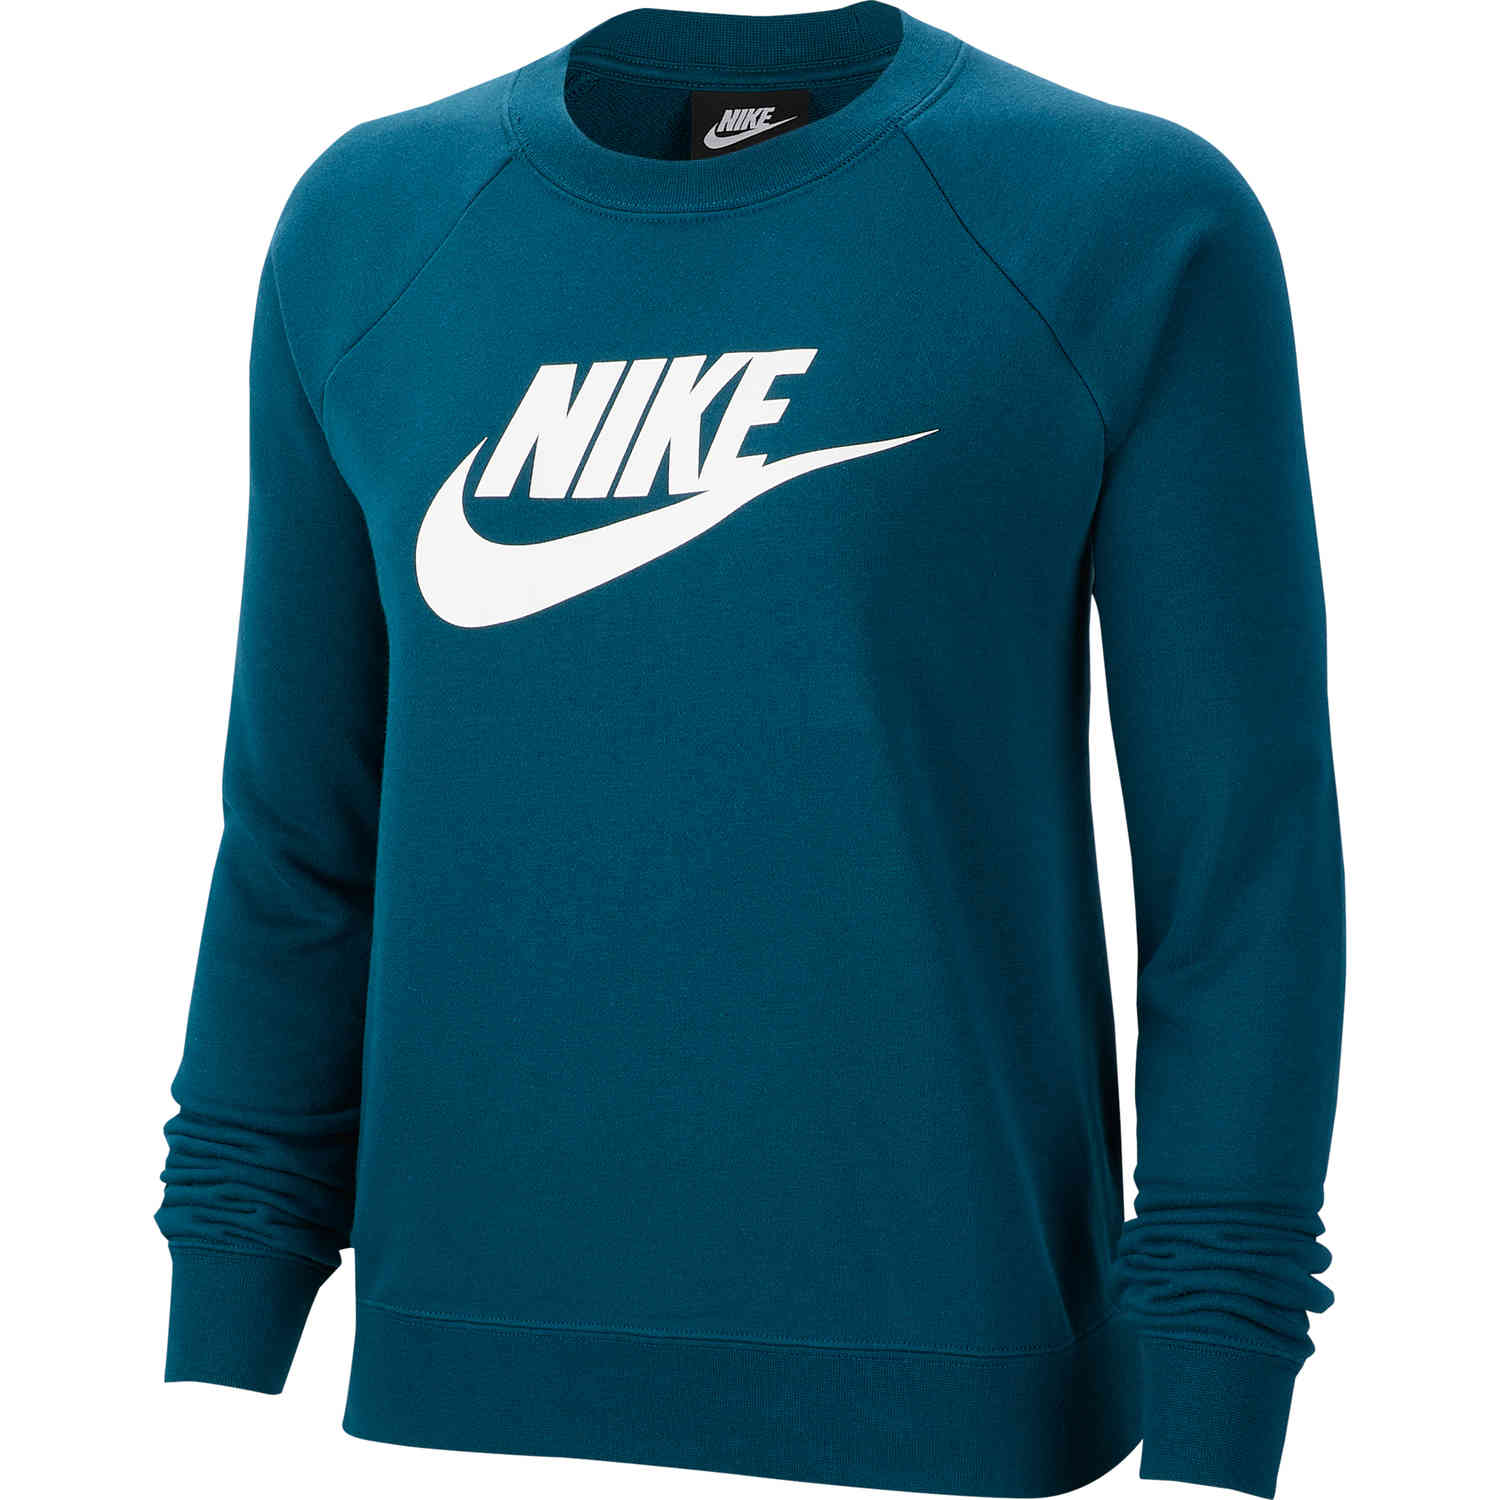 Womens Nike Essential Fleece Crew - Midnight Turquoise - SoccerPro